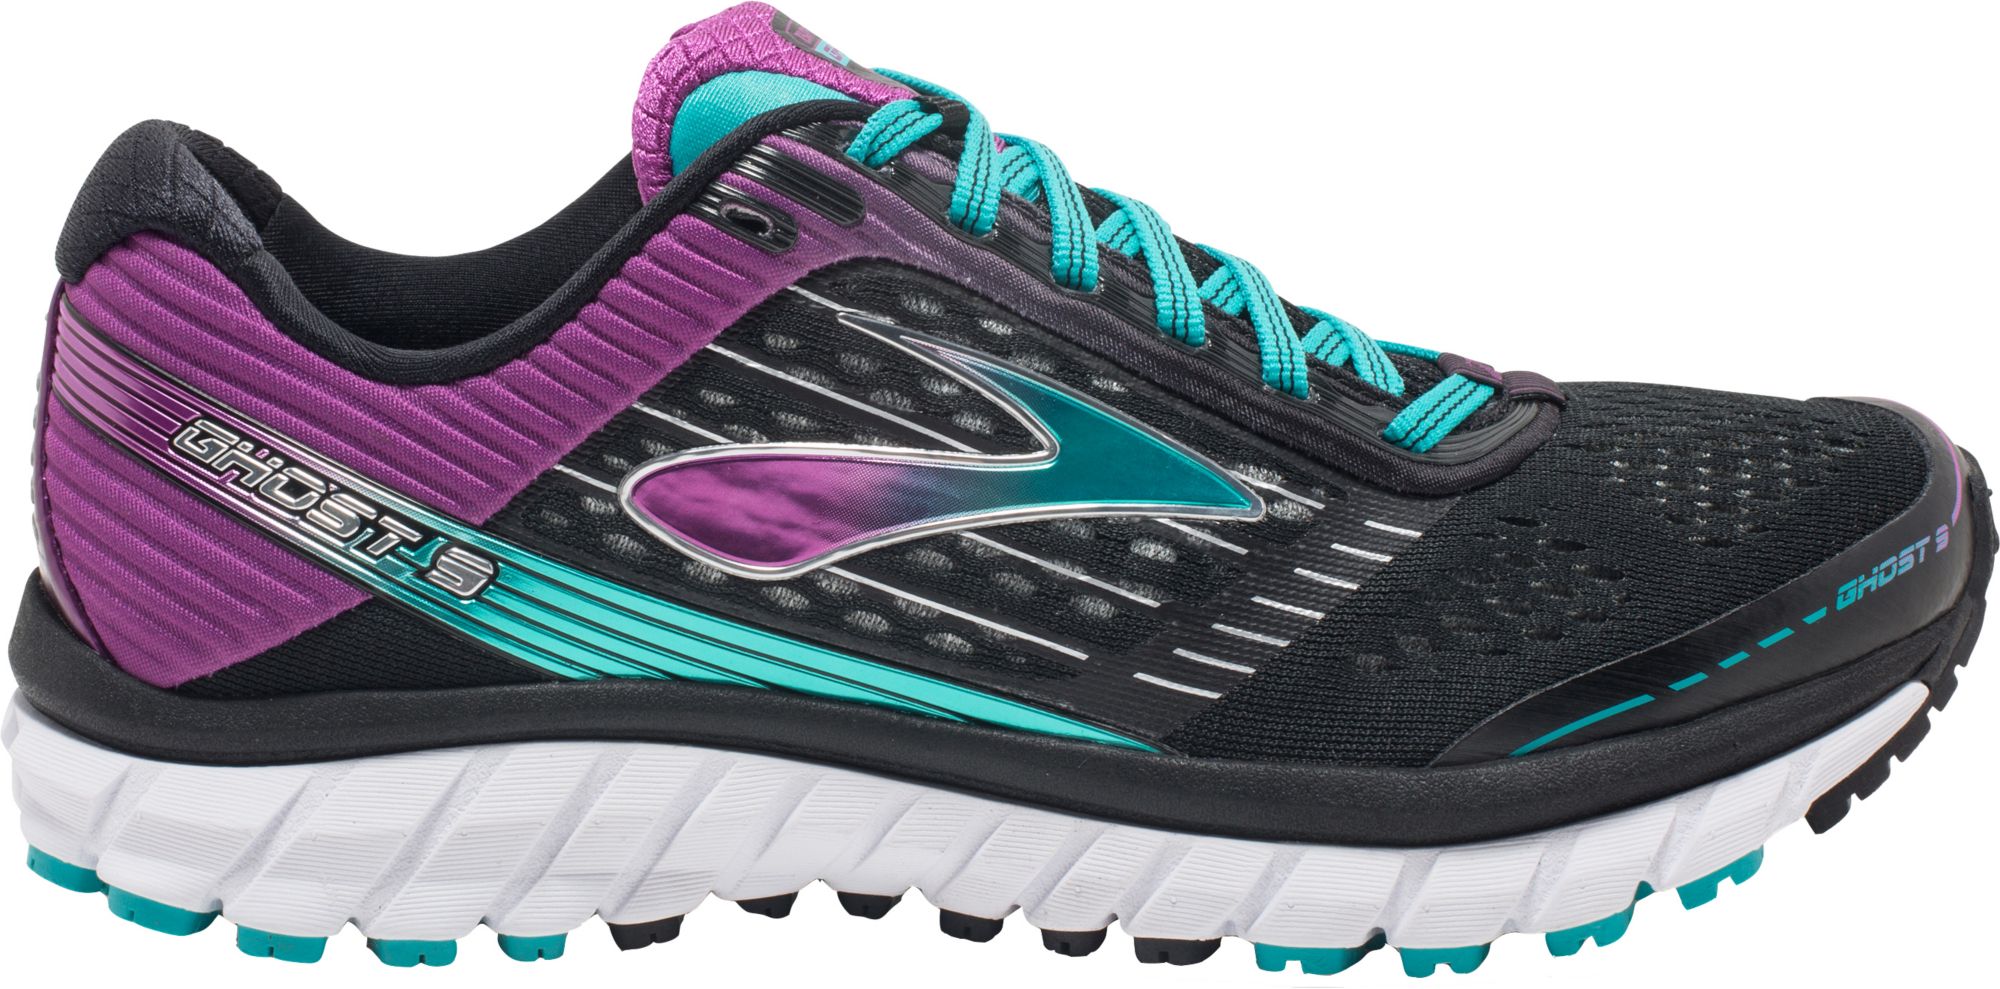 Women's Running Shoes | DICK'S Sporting Goods